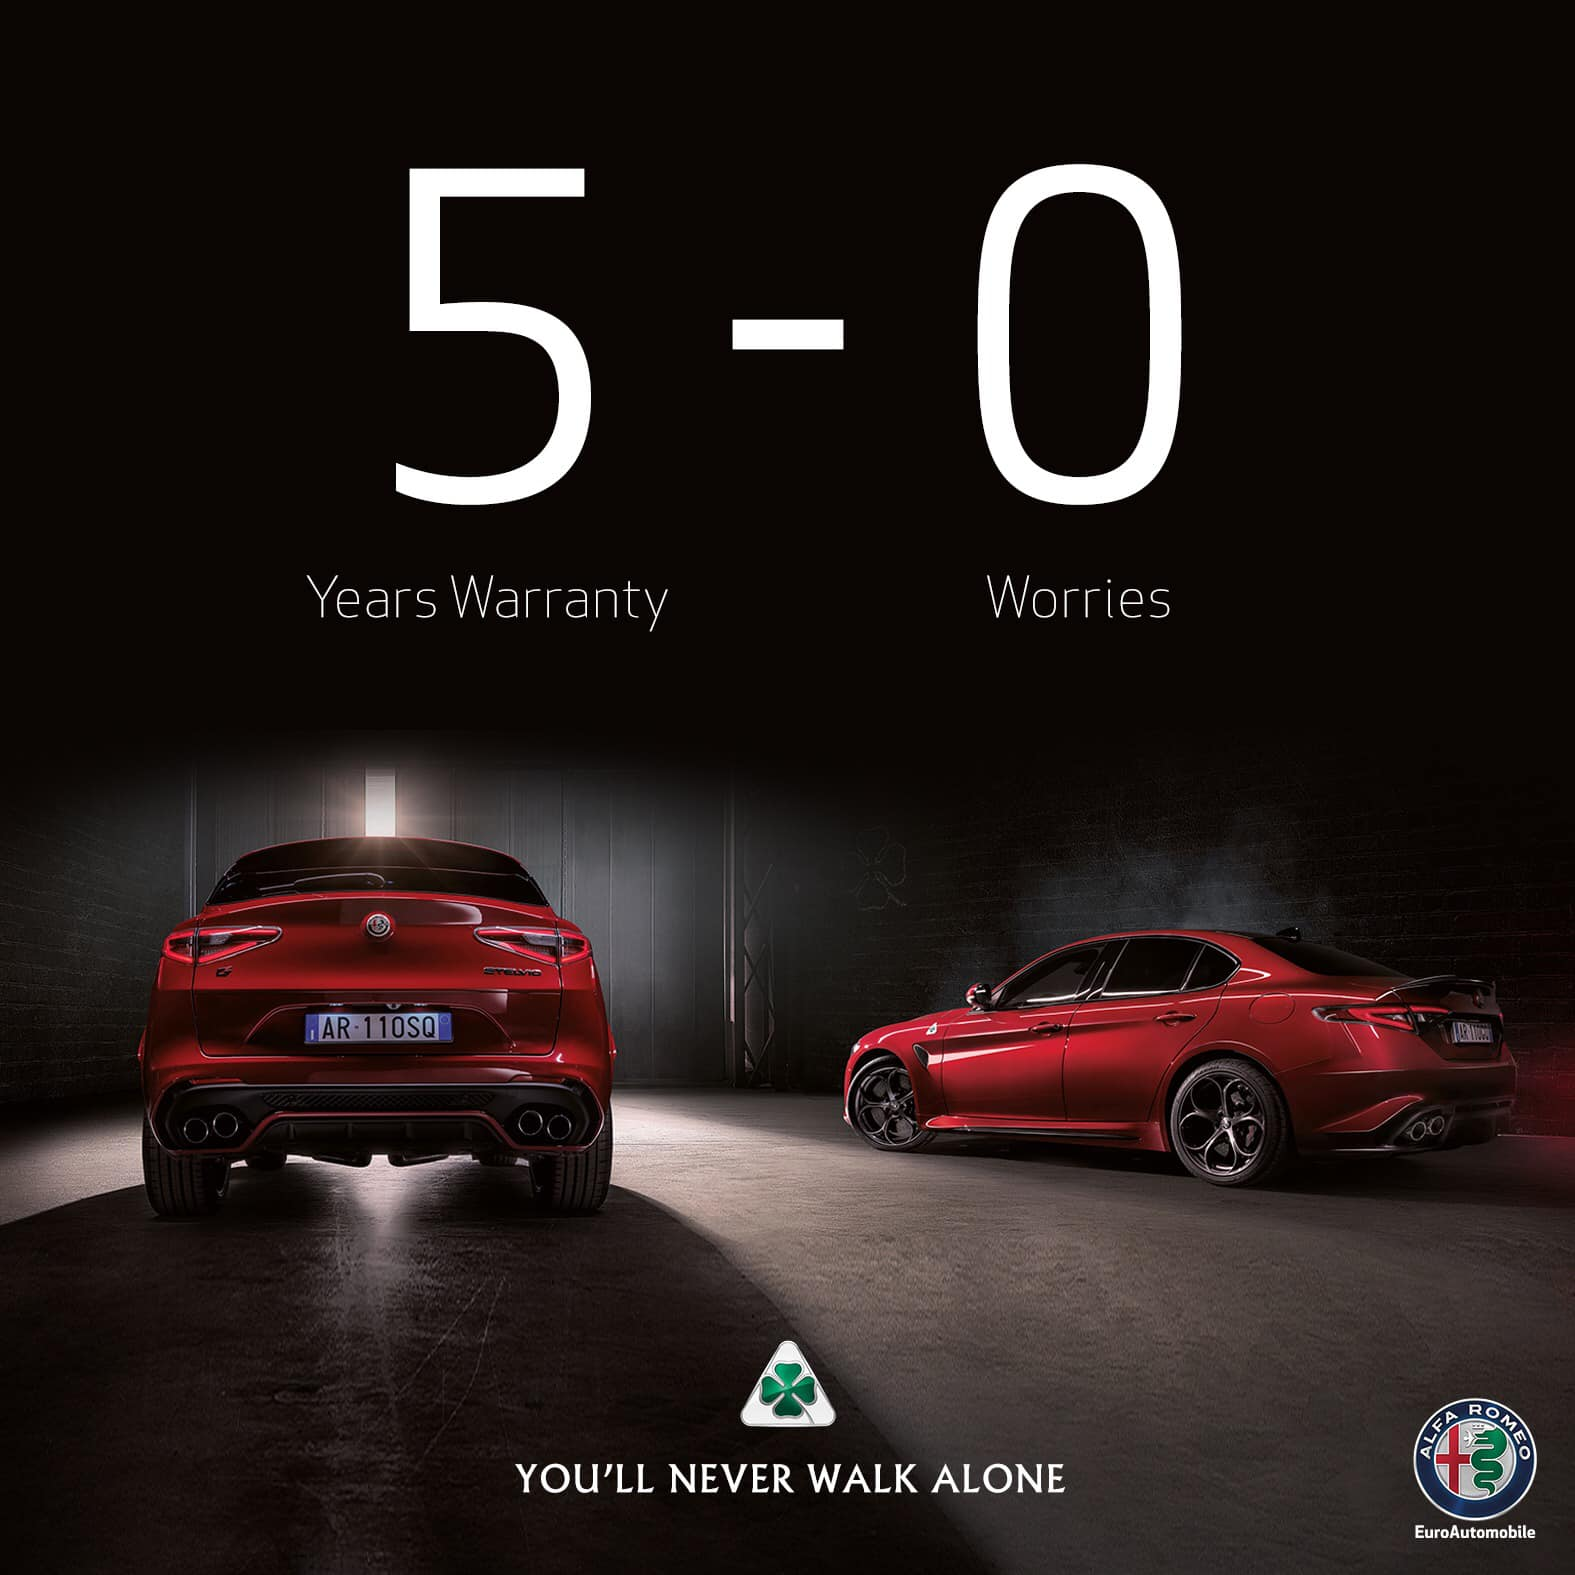 Alfa Romeo Man Utd Trendjacking